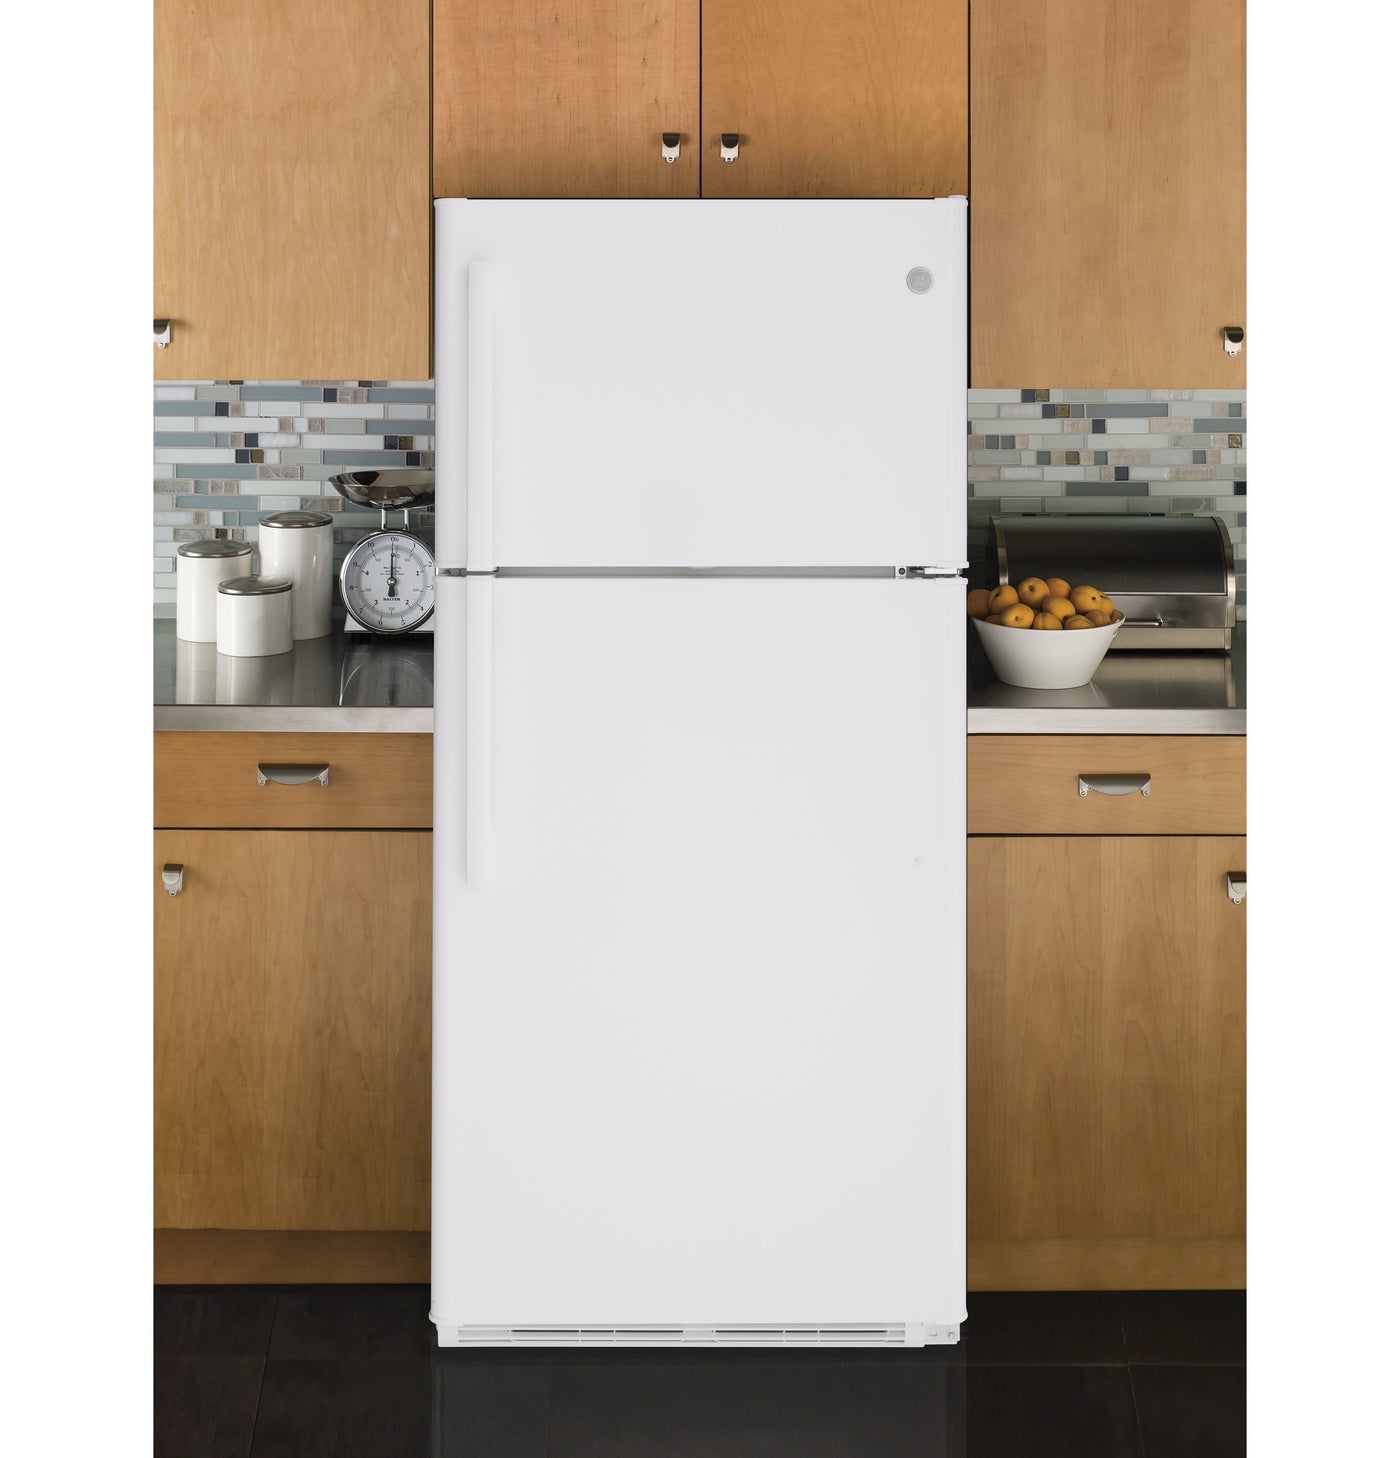 GE White Top-Freezer Refrigerator (18 Cu. Ft.) - GTS18FTLKWW